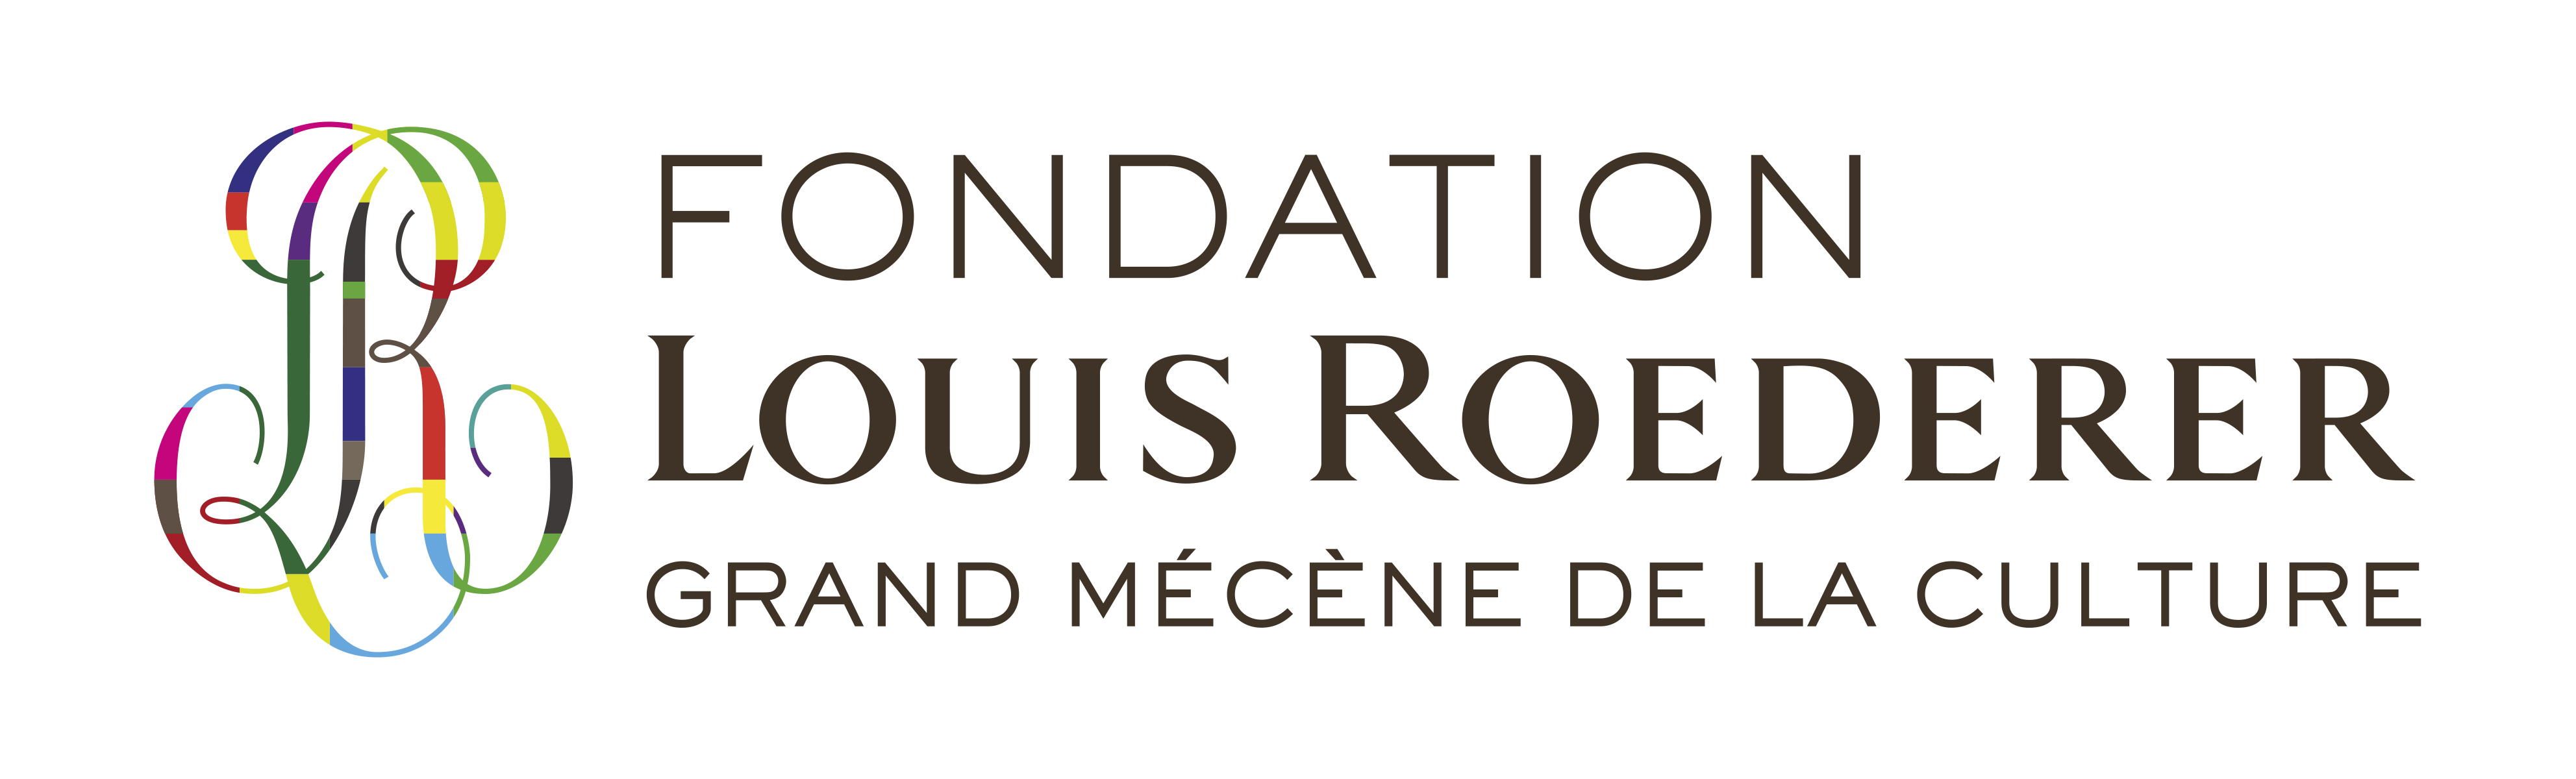 Fondation Louis Roederer